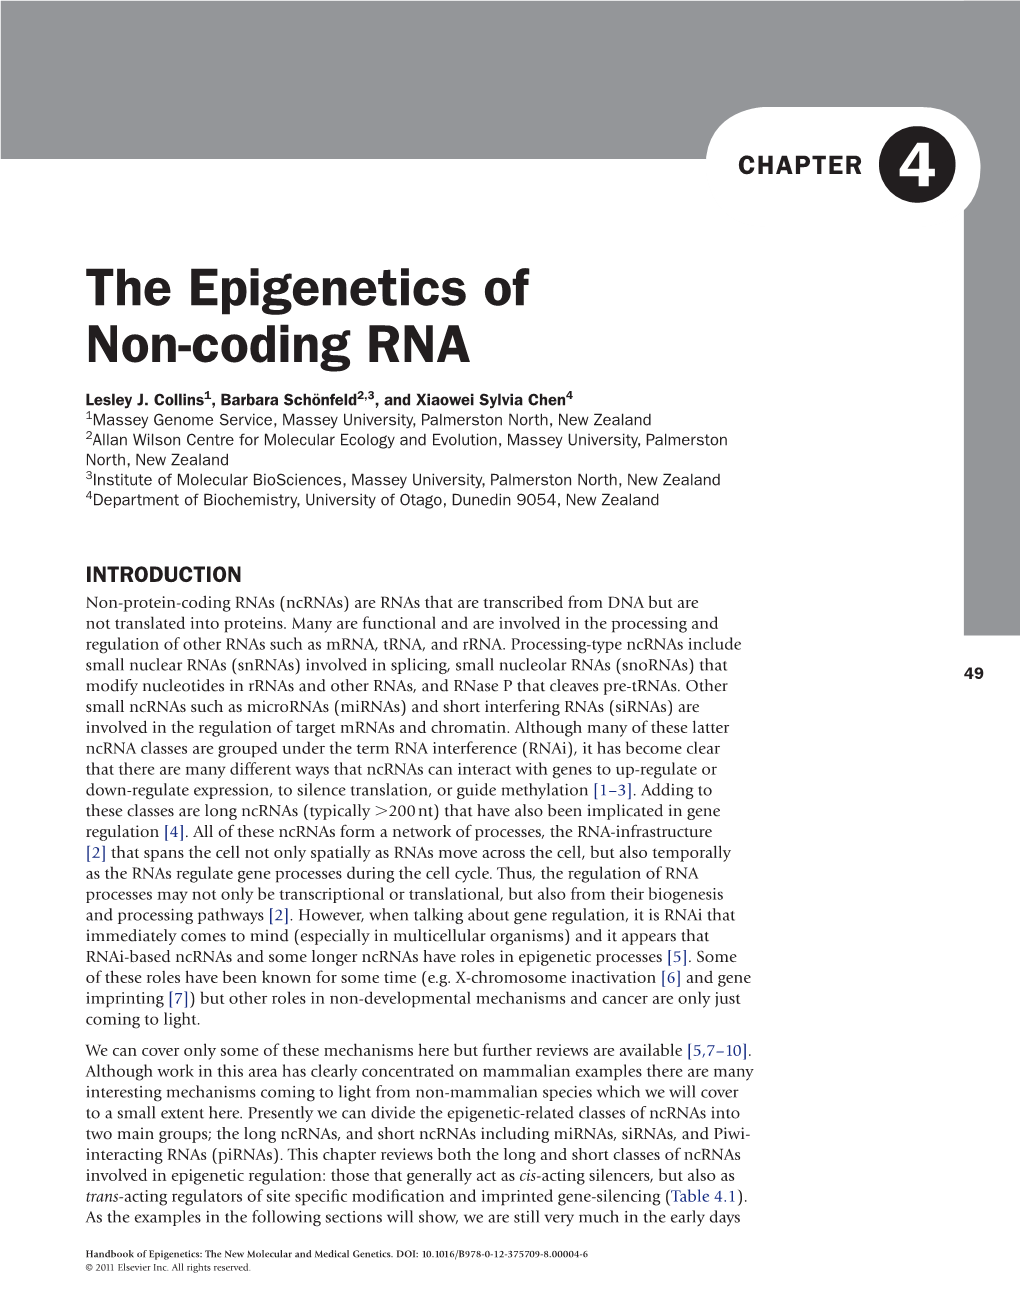 The Epigenetics of Non-Coding RNA